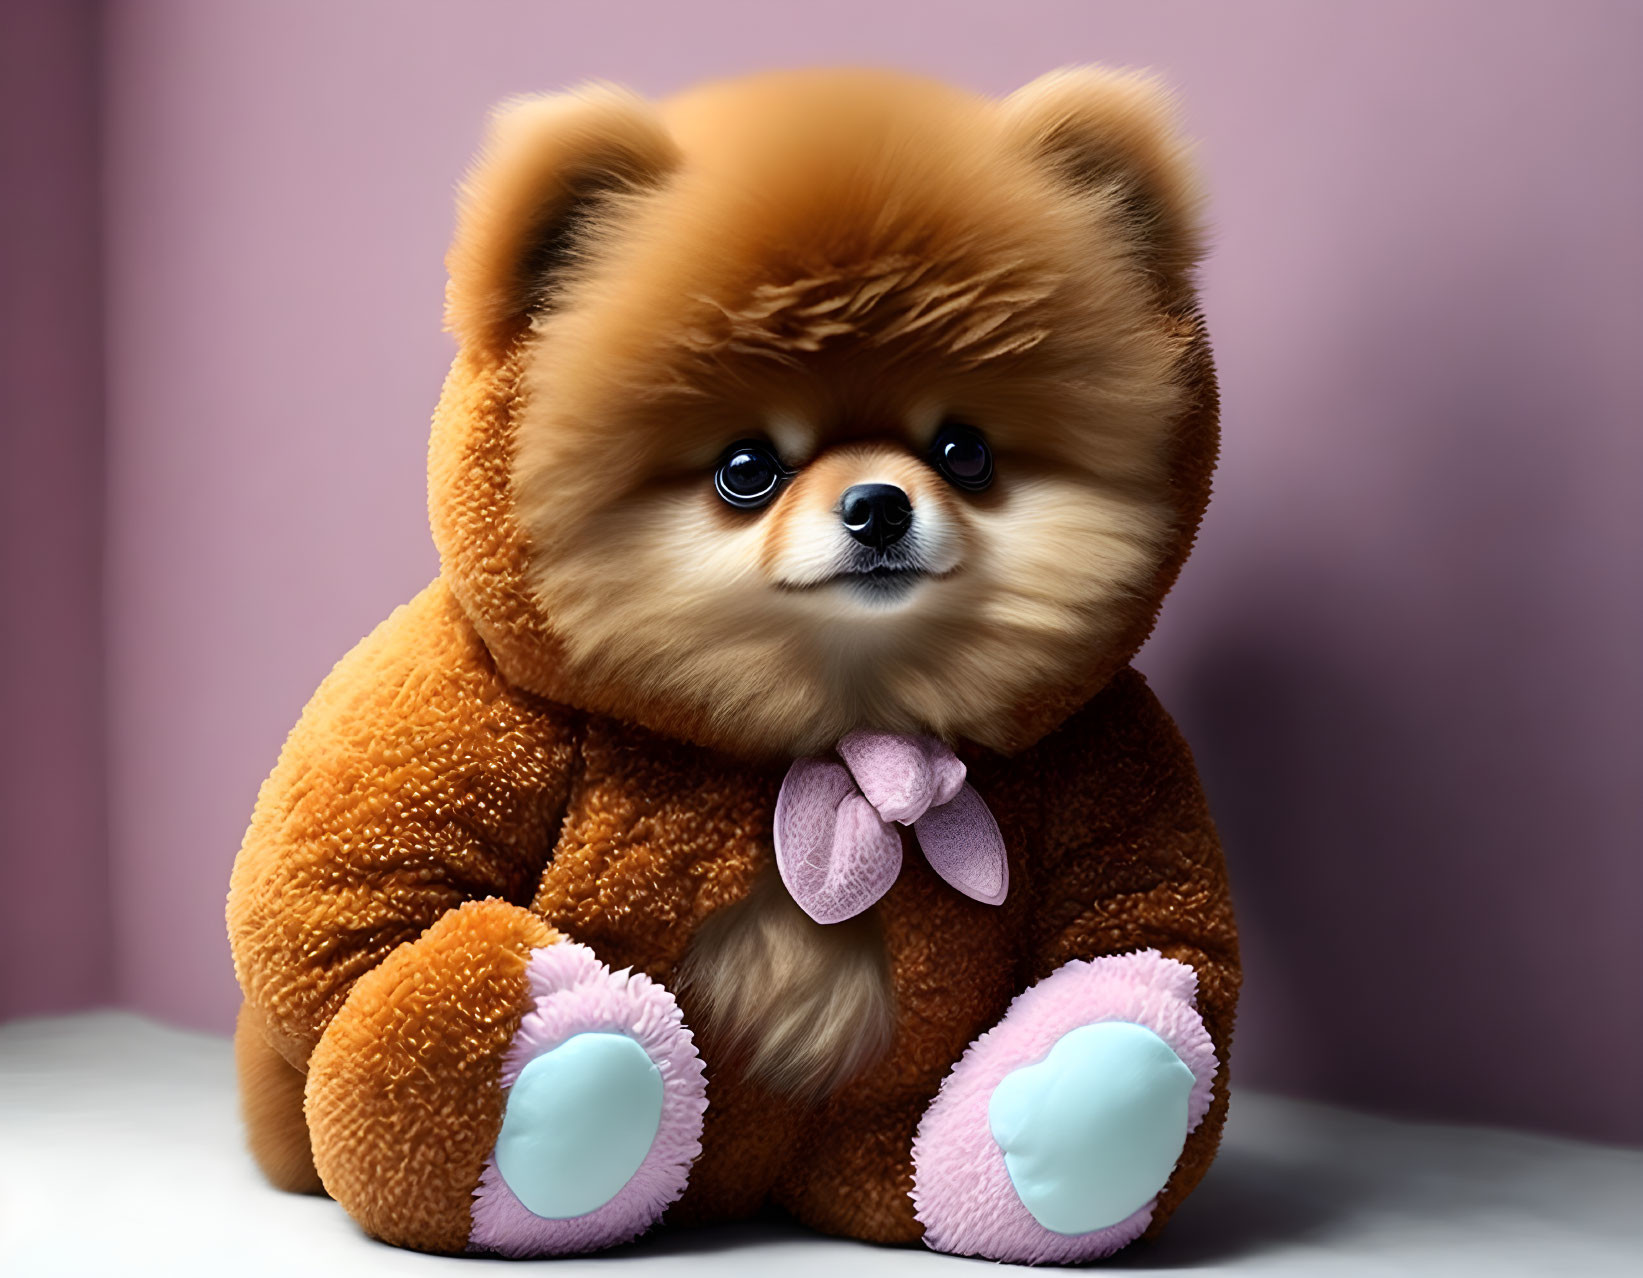 Fluffy Pomeranian Dog in Teddy Bear Costume on Pink Background